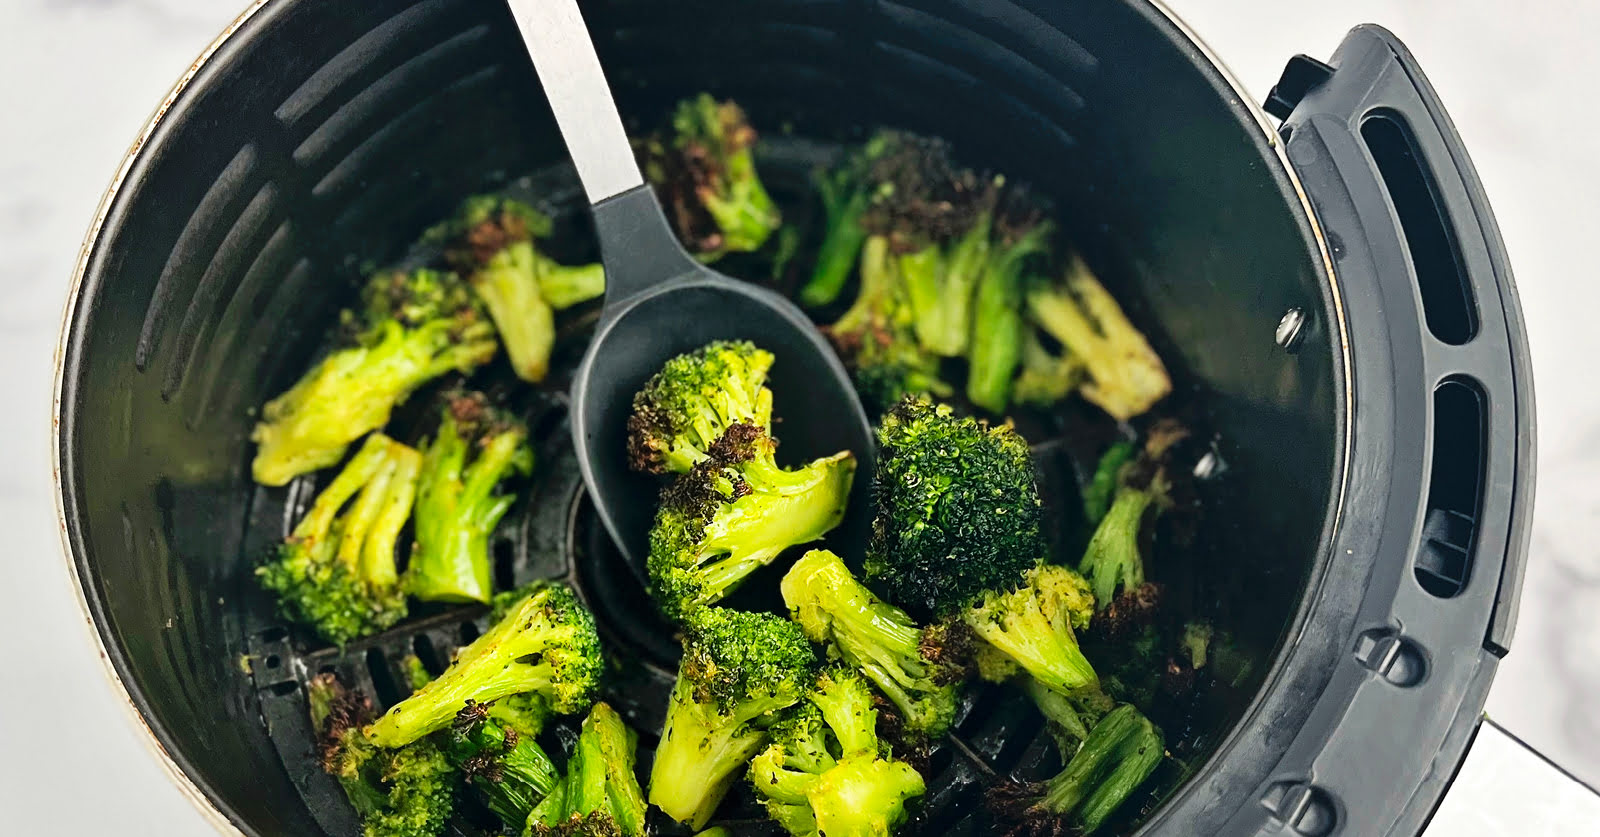 How To Cook Frozen Broccoli In Air Fryer | Storables